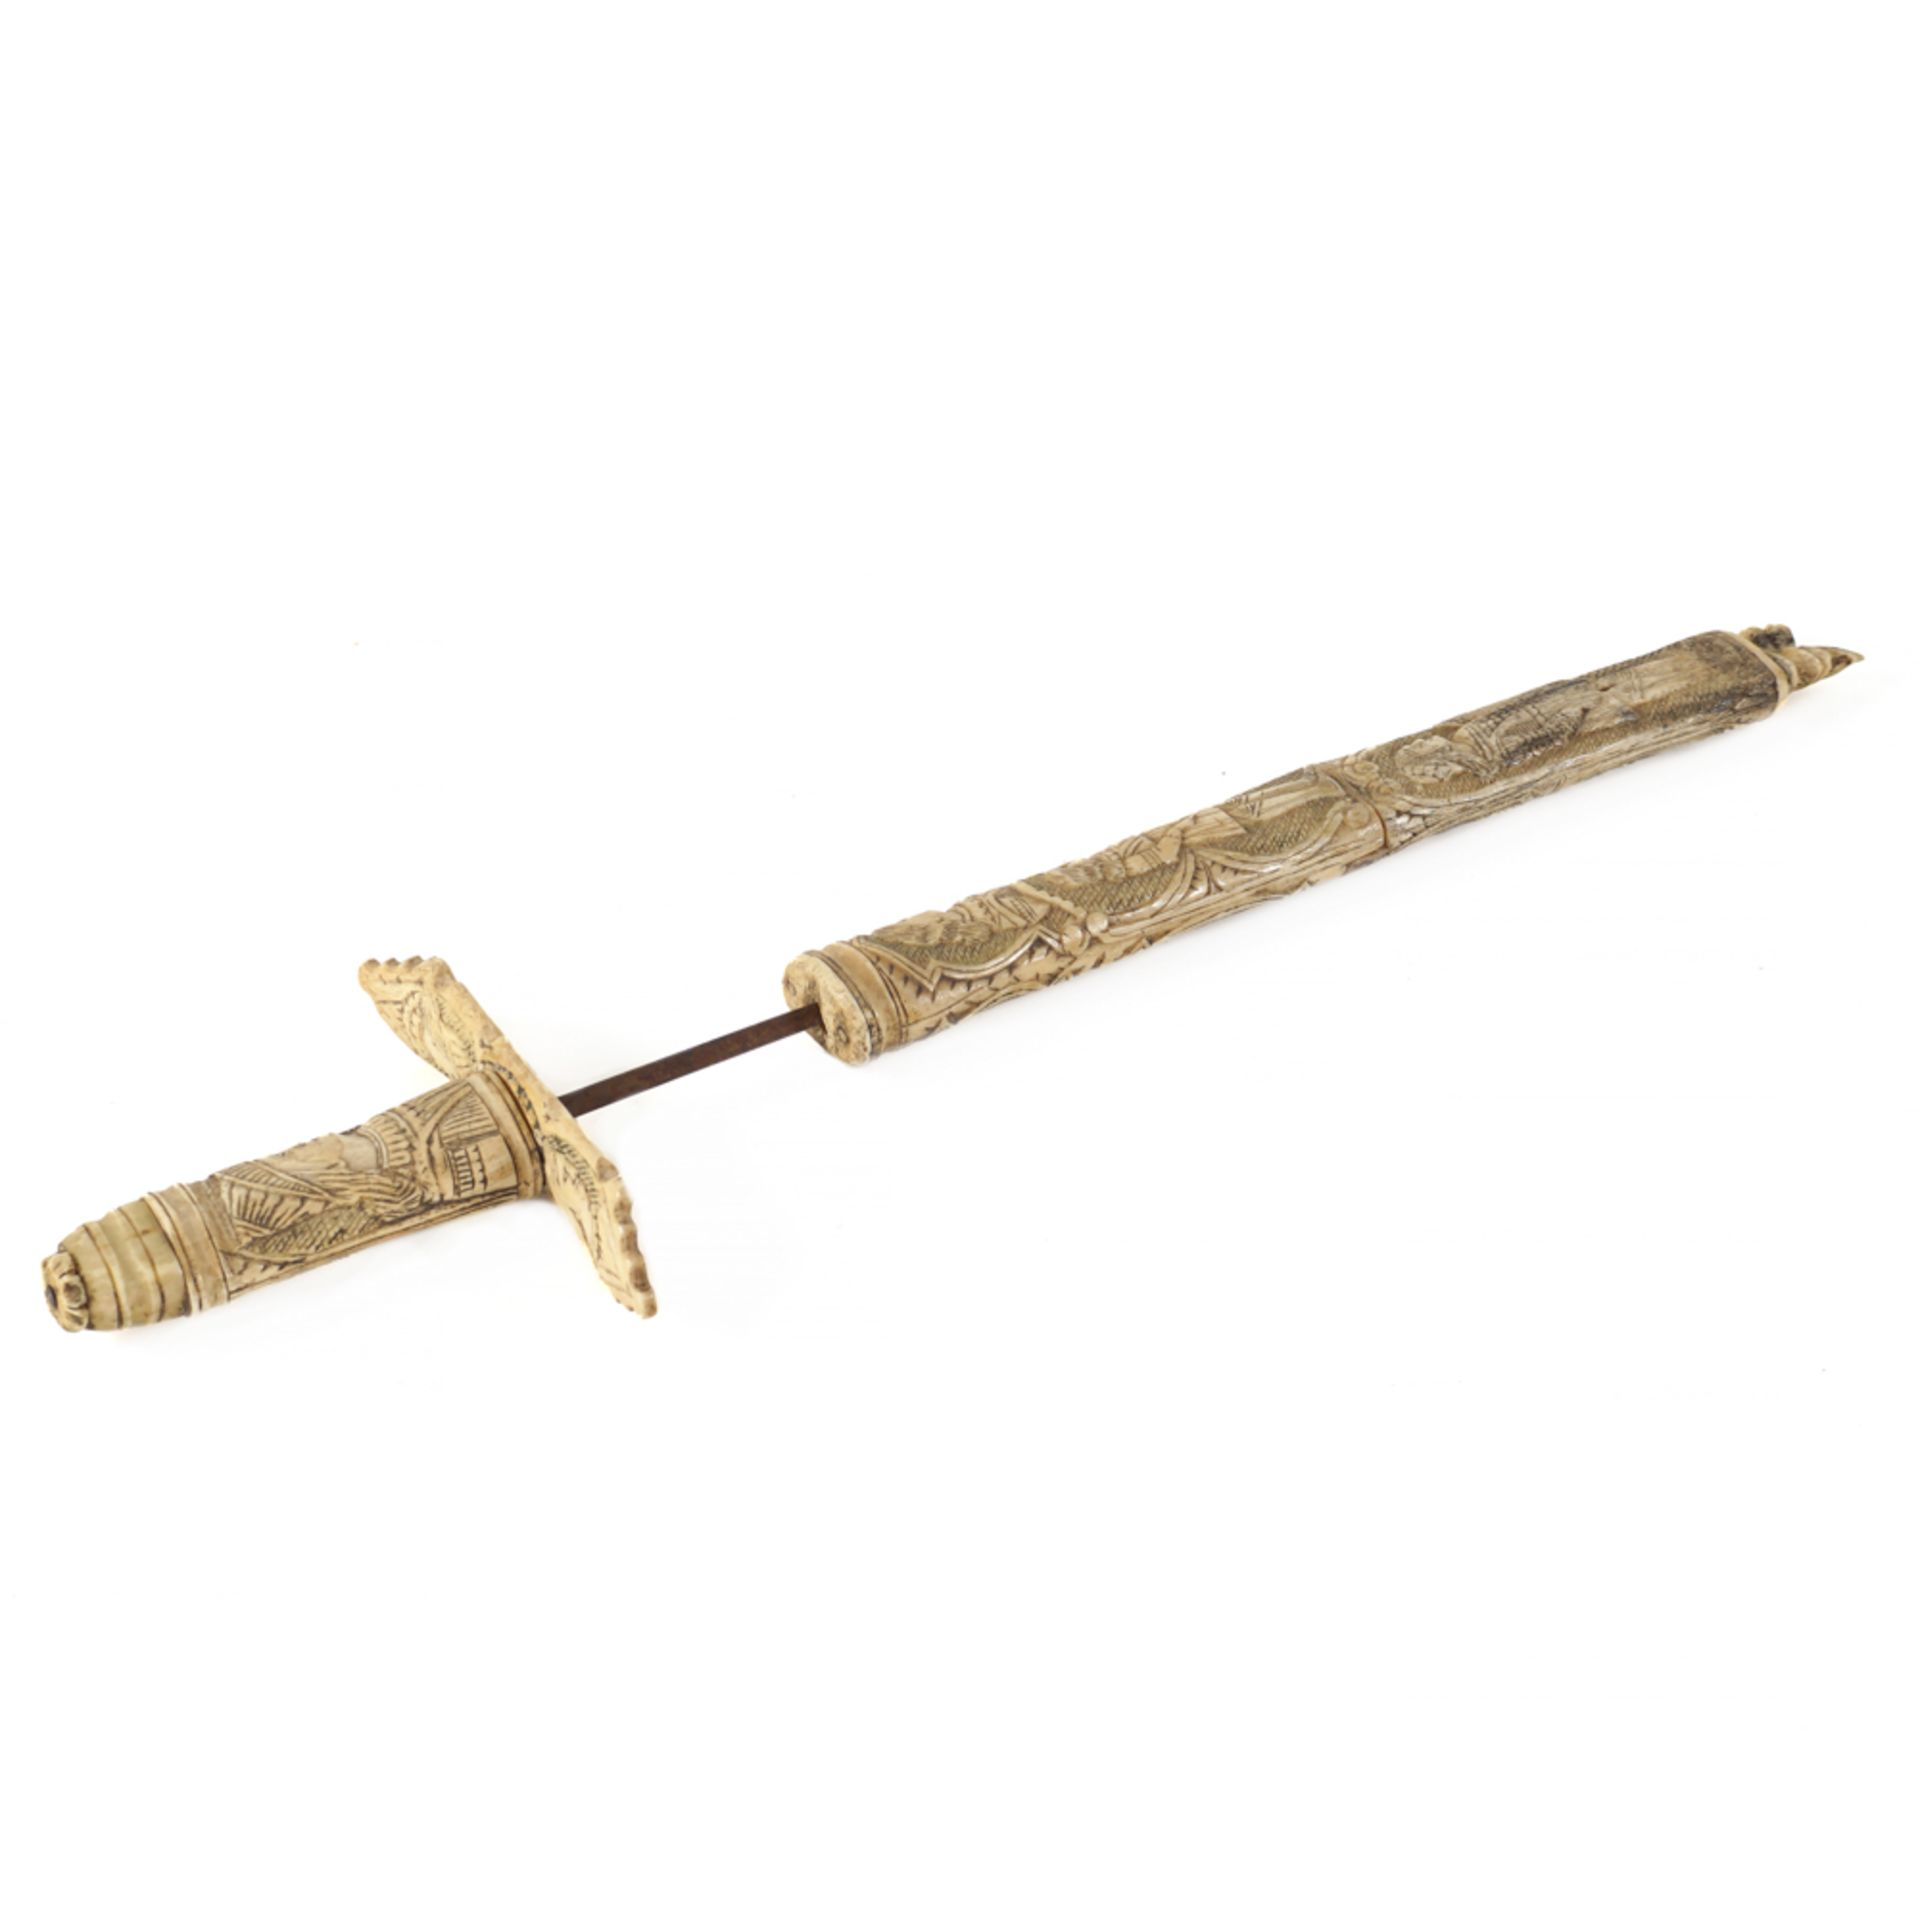 Bone dagger Germany, 17th-18th century l. 52 cm. - Image 2 of 2